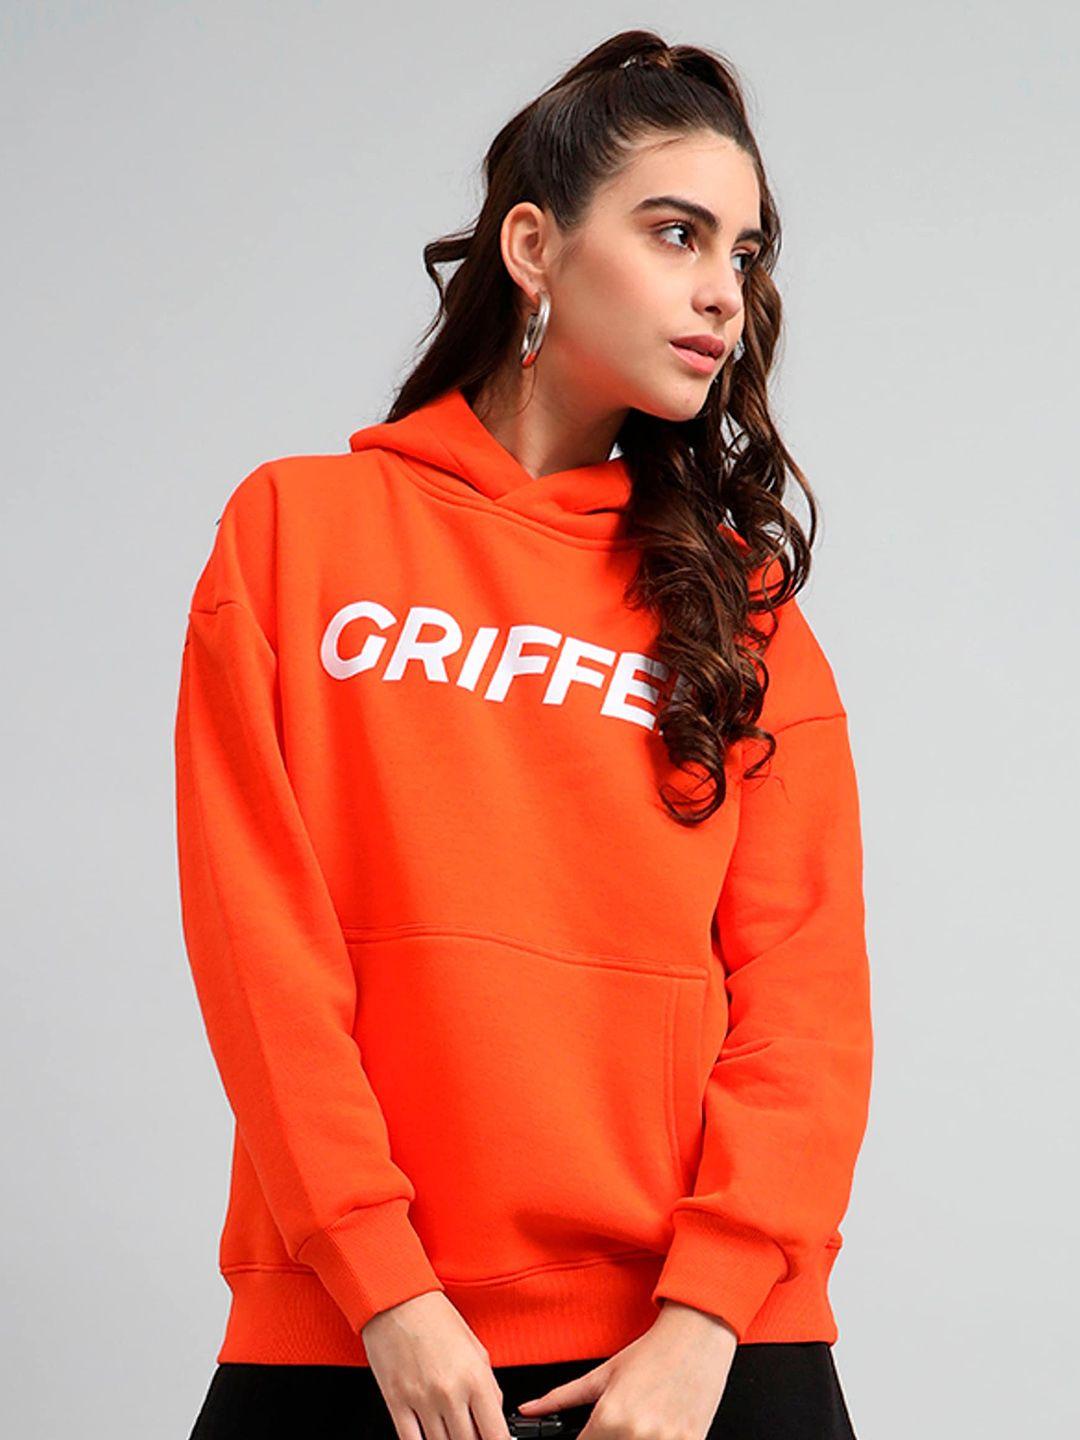 griffel typography printed hooded pullover sweatshirt